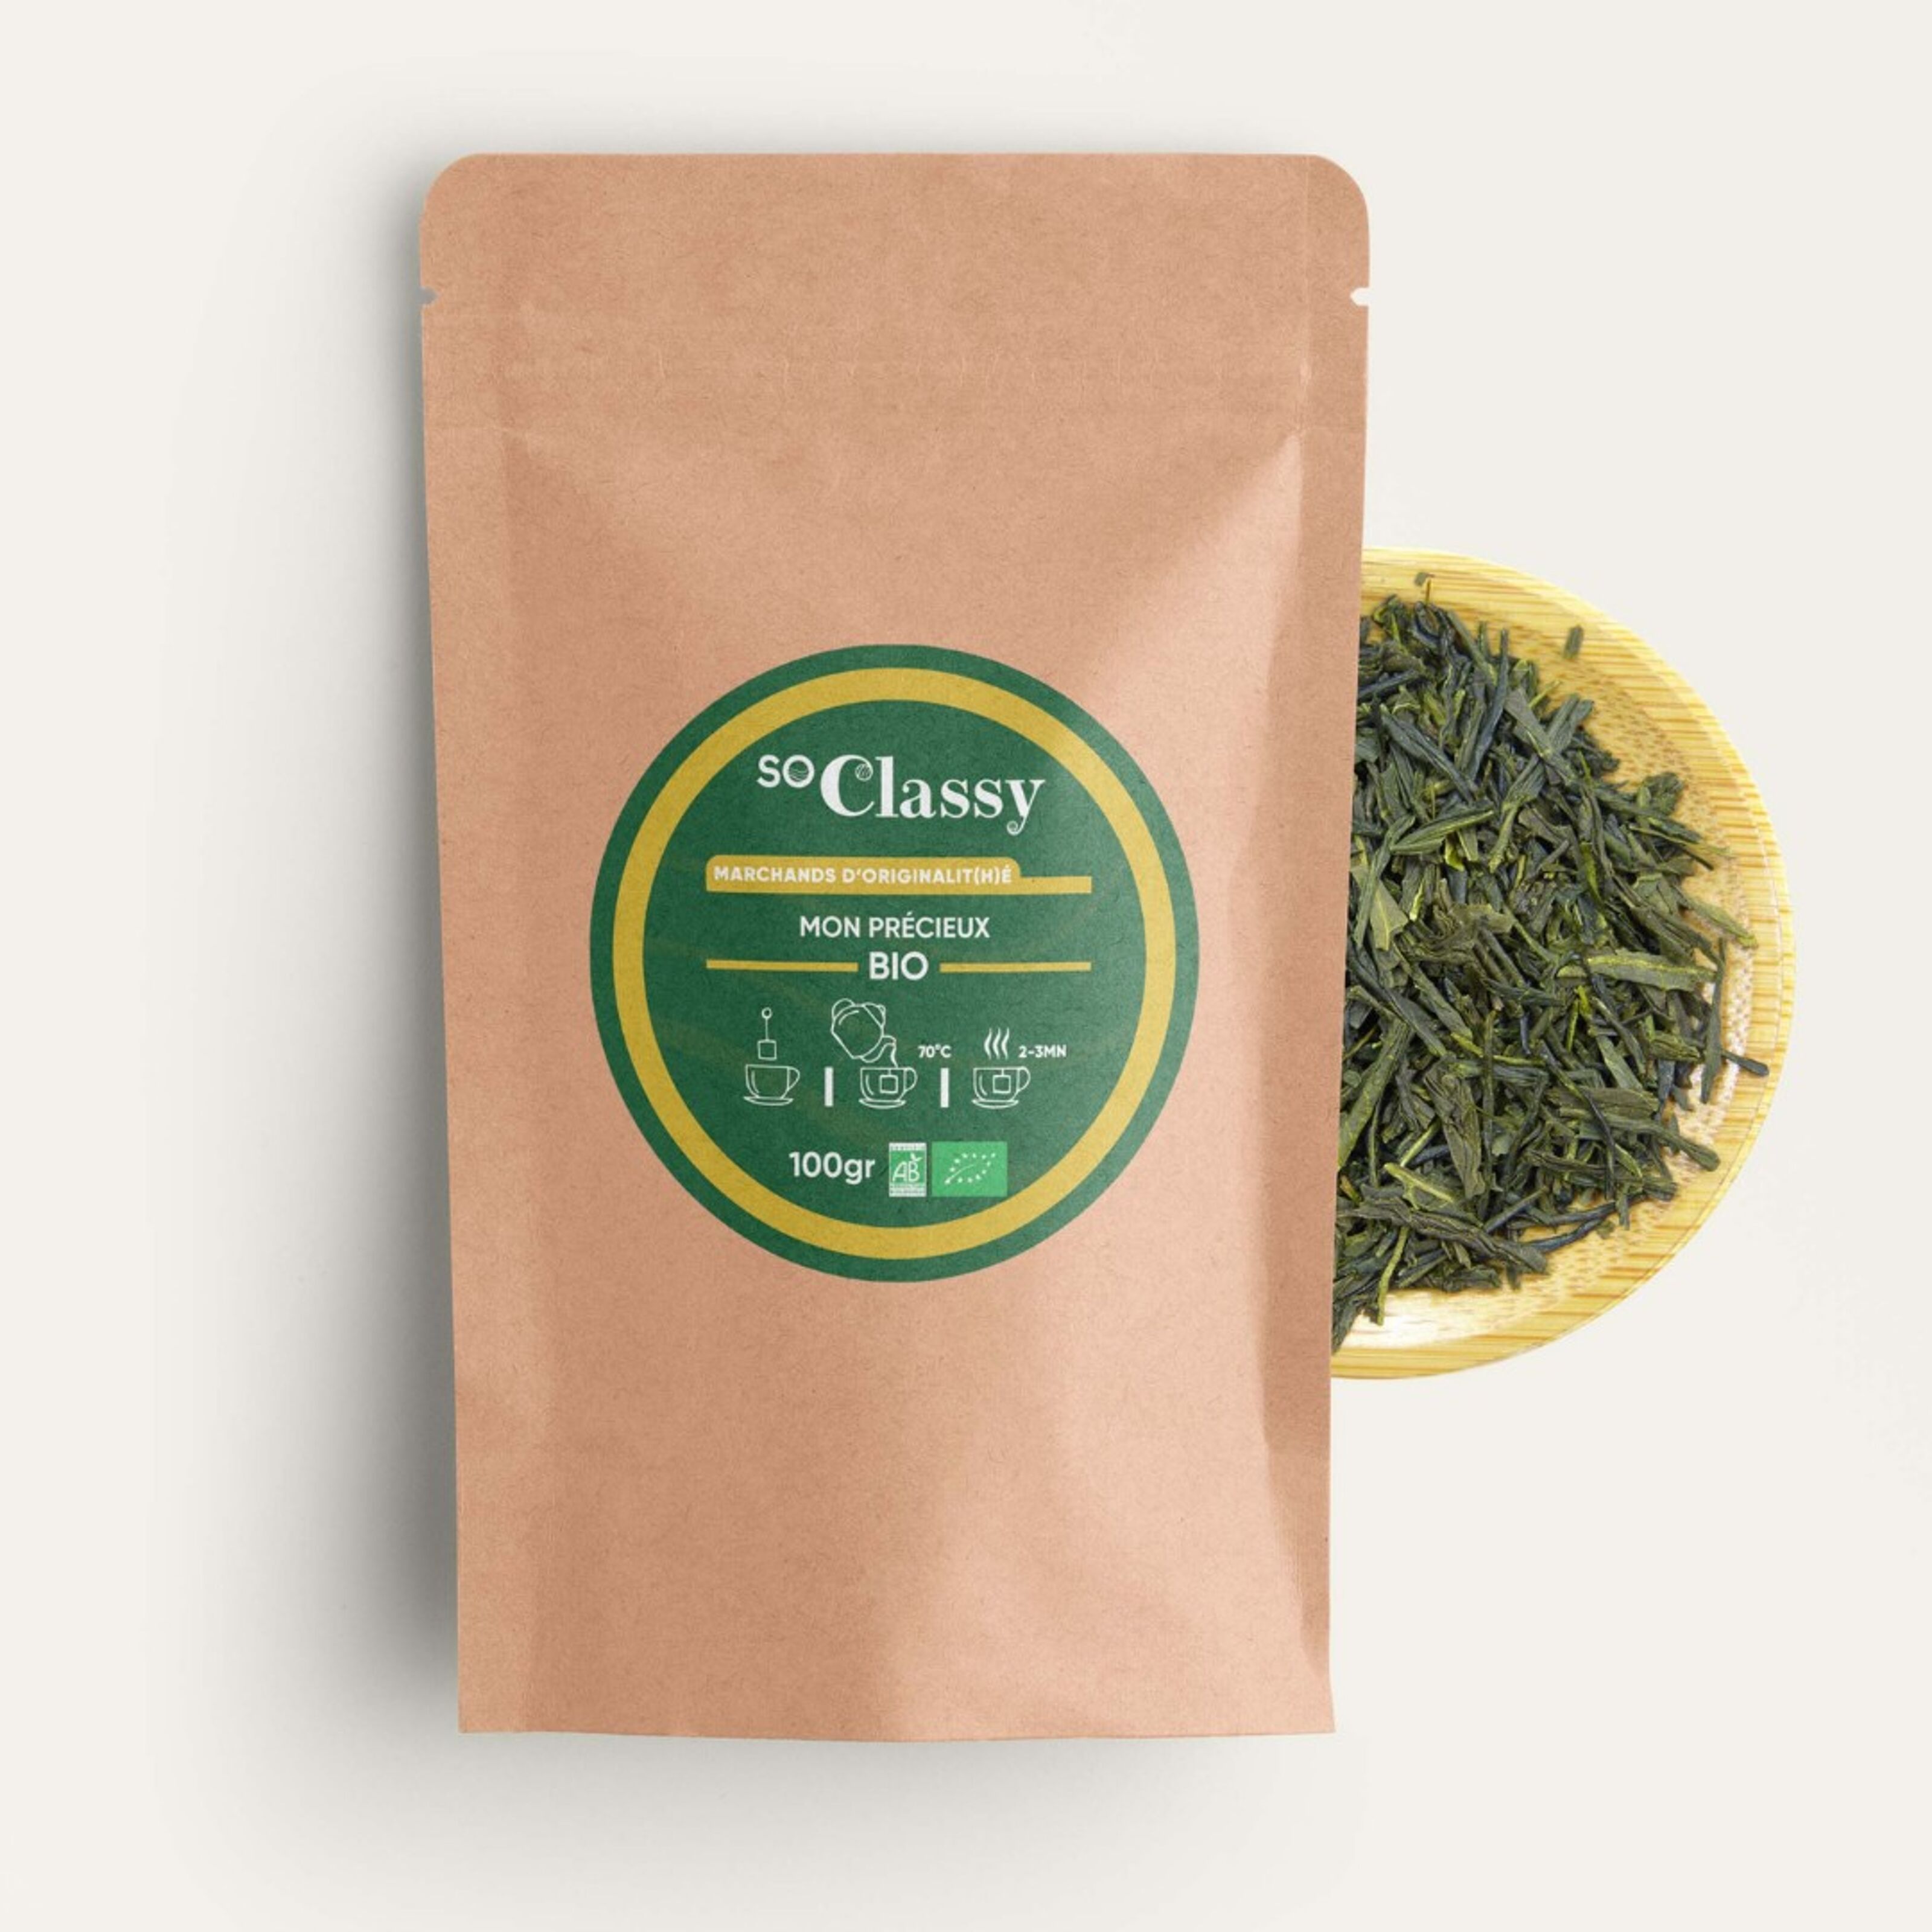 Thé vert sencha de Chine - Boîte vrac 100g